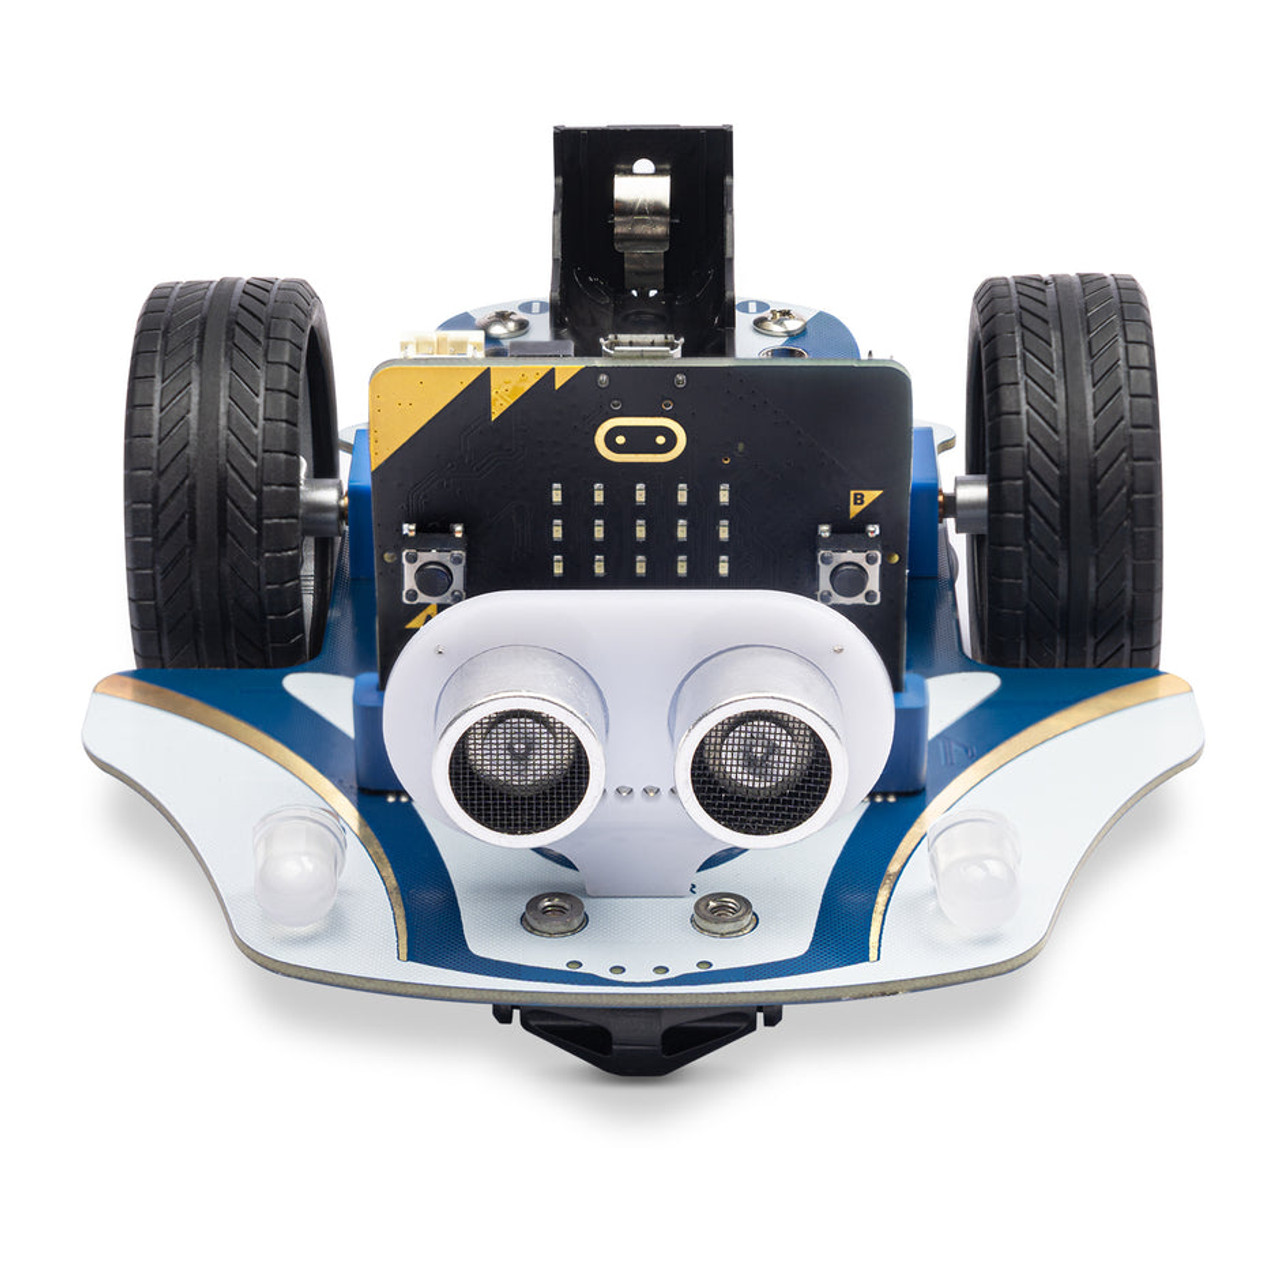 ELECFREAKS Robot Car丨Makecode & Programmable Robot Car Kit丨Smart Cutebot Car